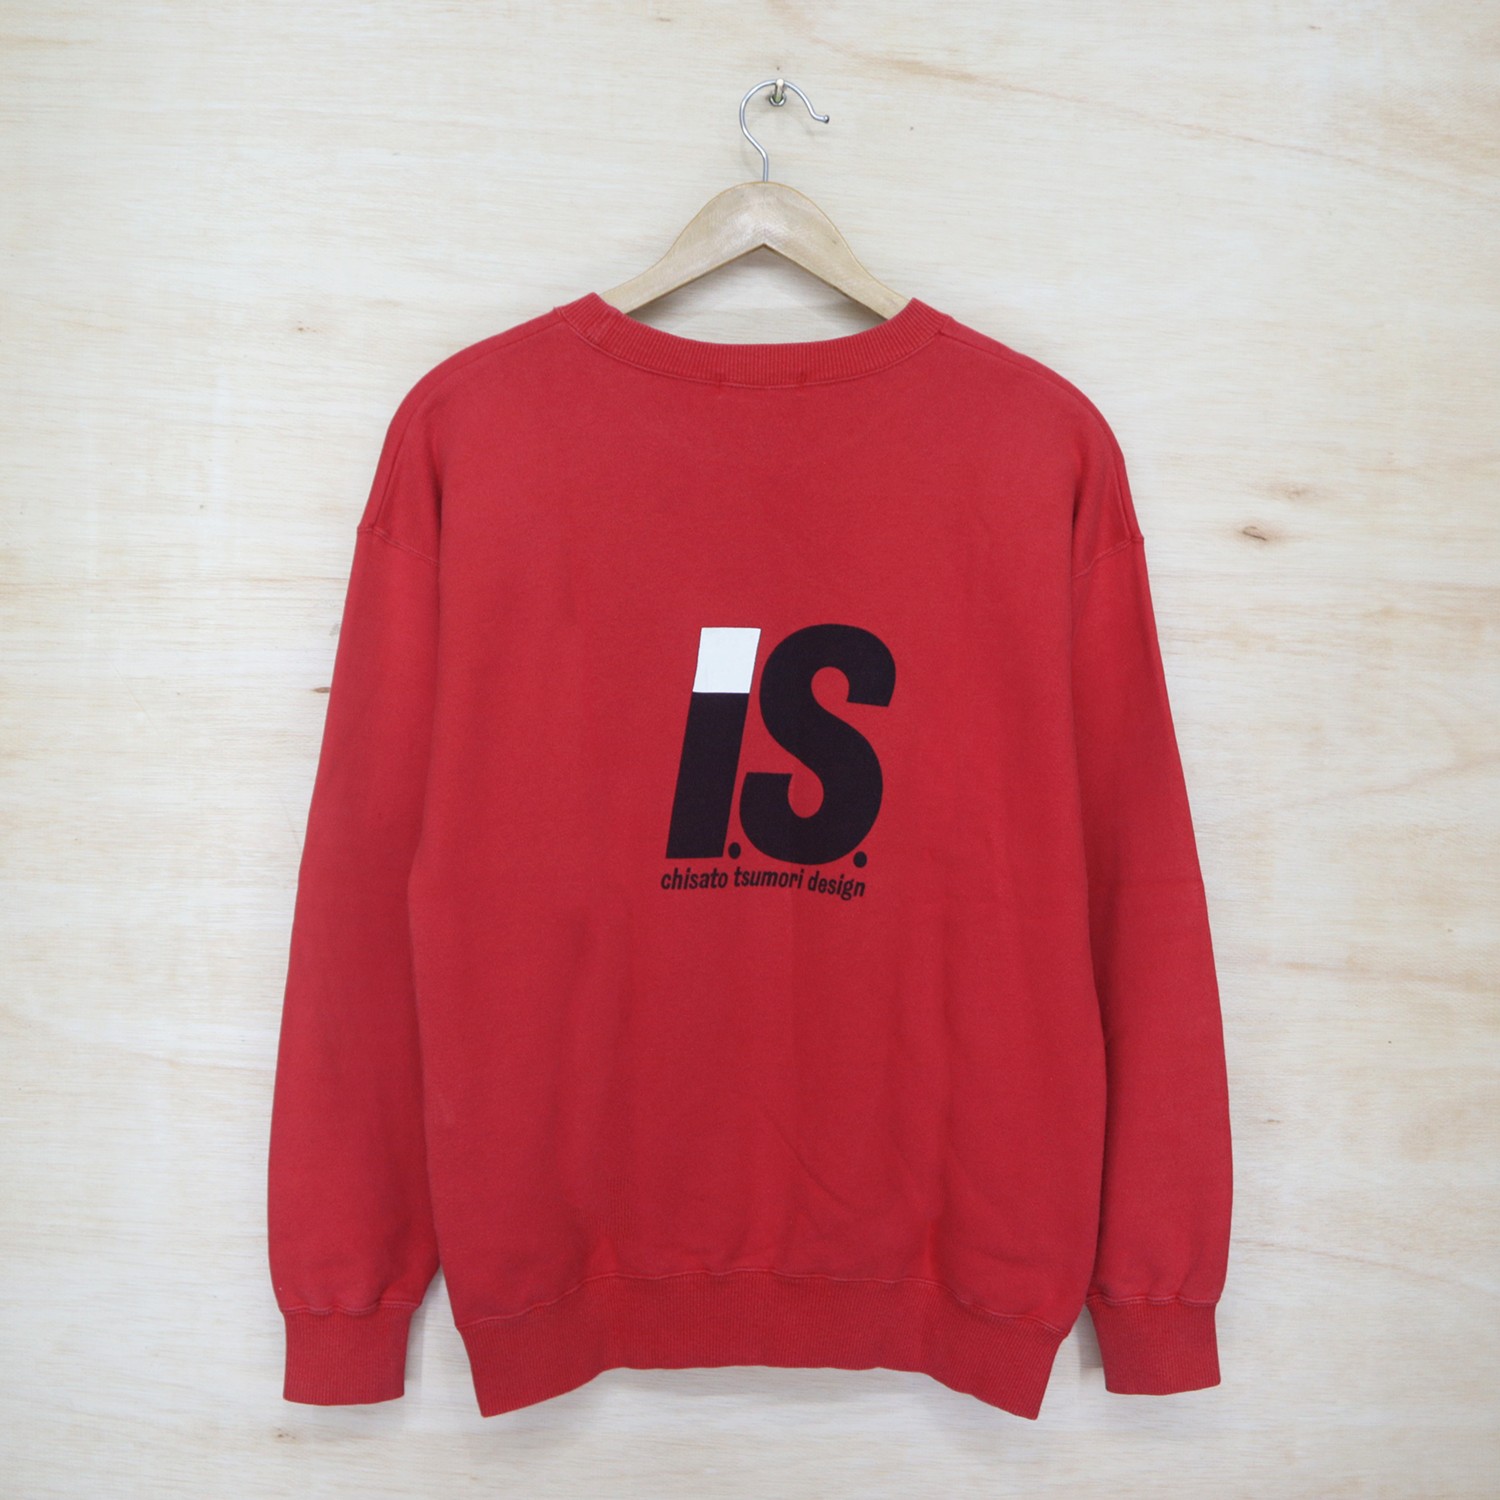 Vintage 90s ISSEY MIYAKE Chisato Tsumori Design Big Logo Sweater Sweatshirt Pullover Jumper - 1